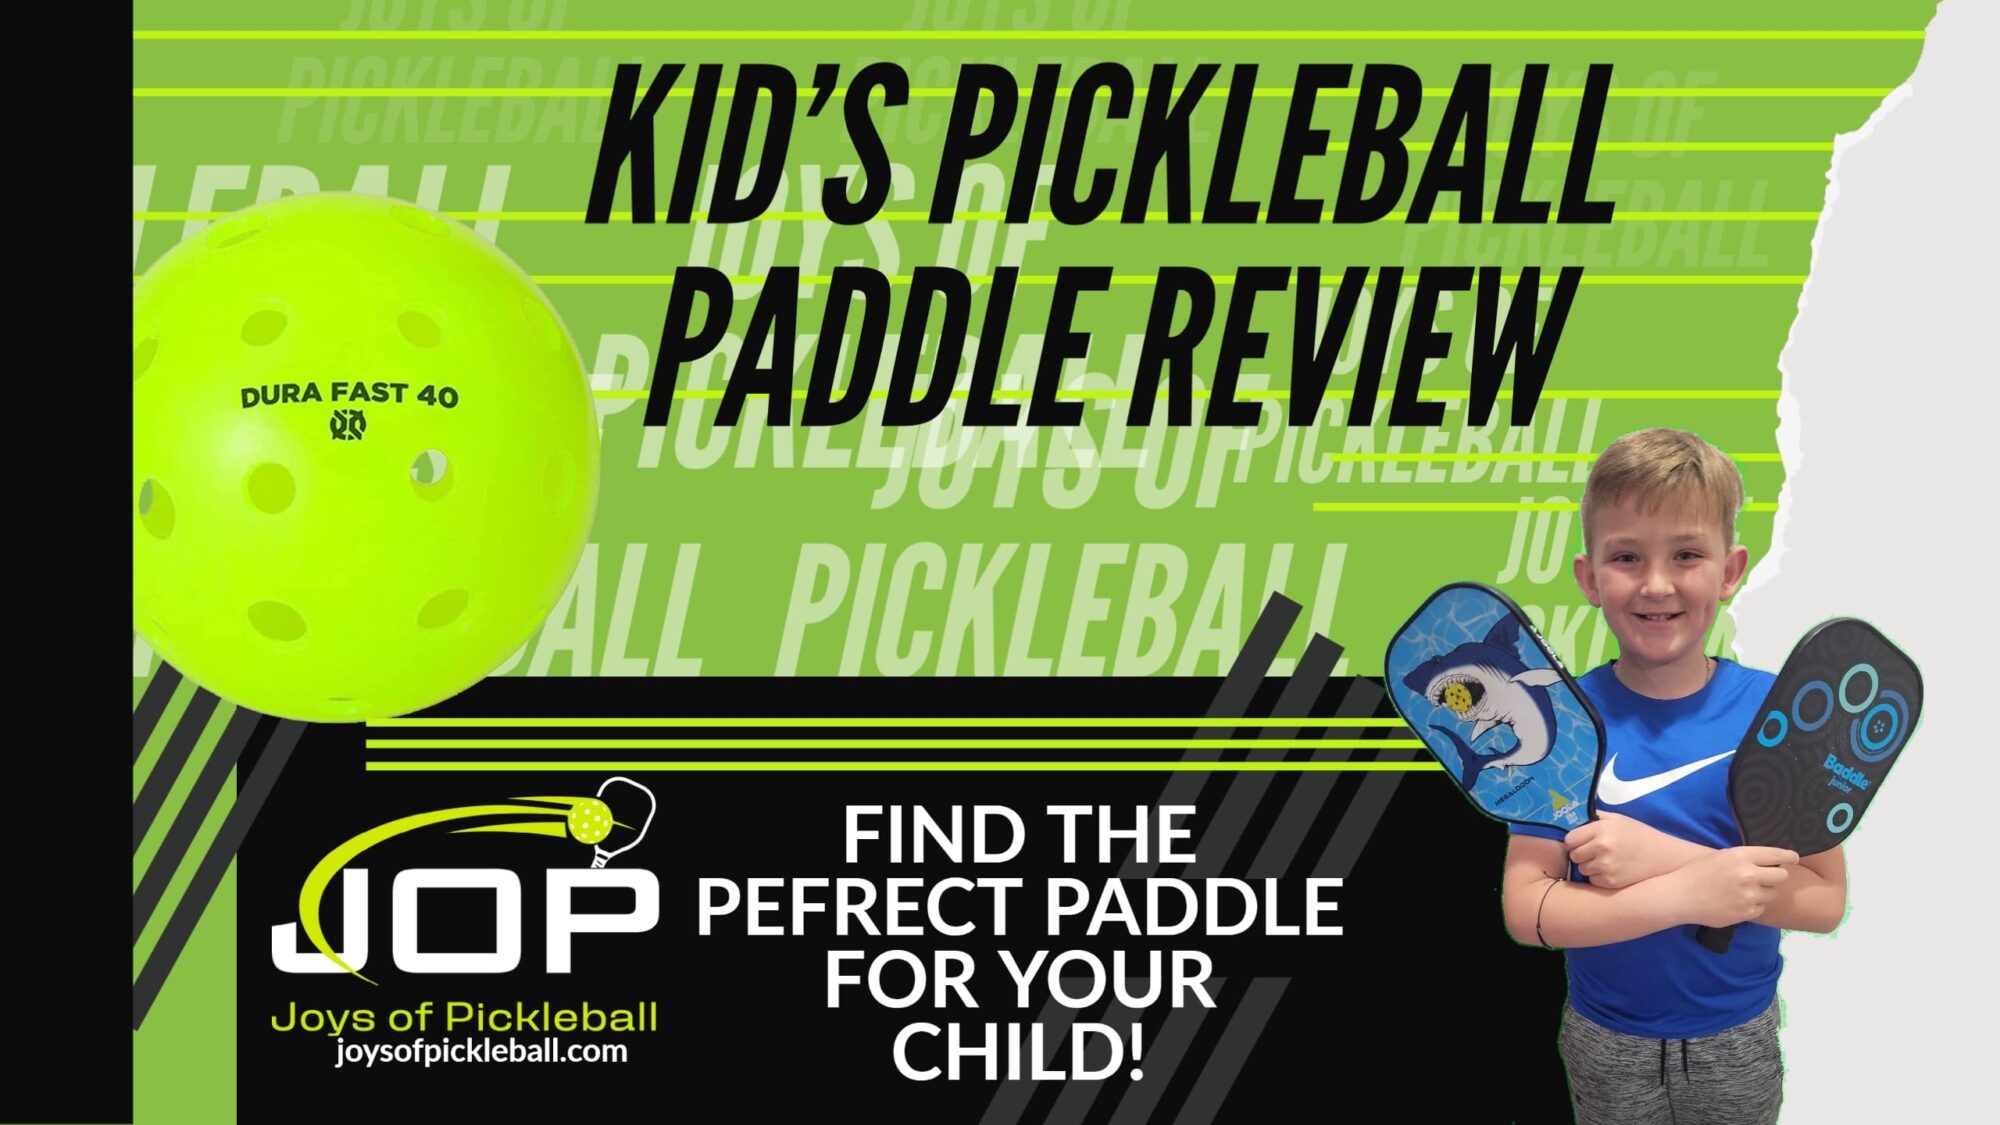 Kid's Pickleball Paddle Reviews Video Thumbnail